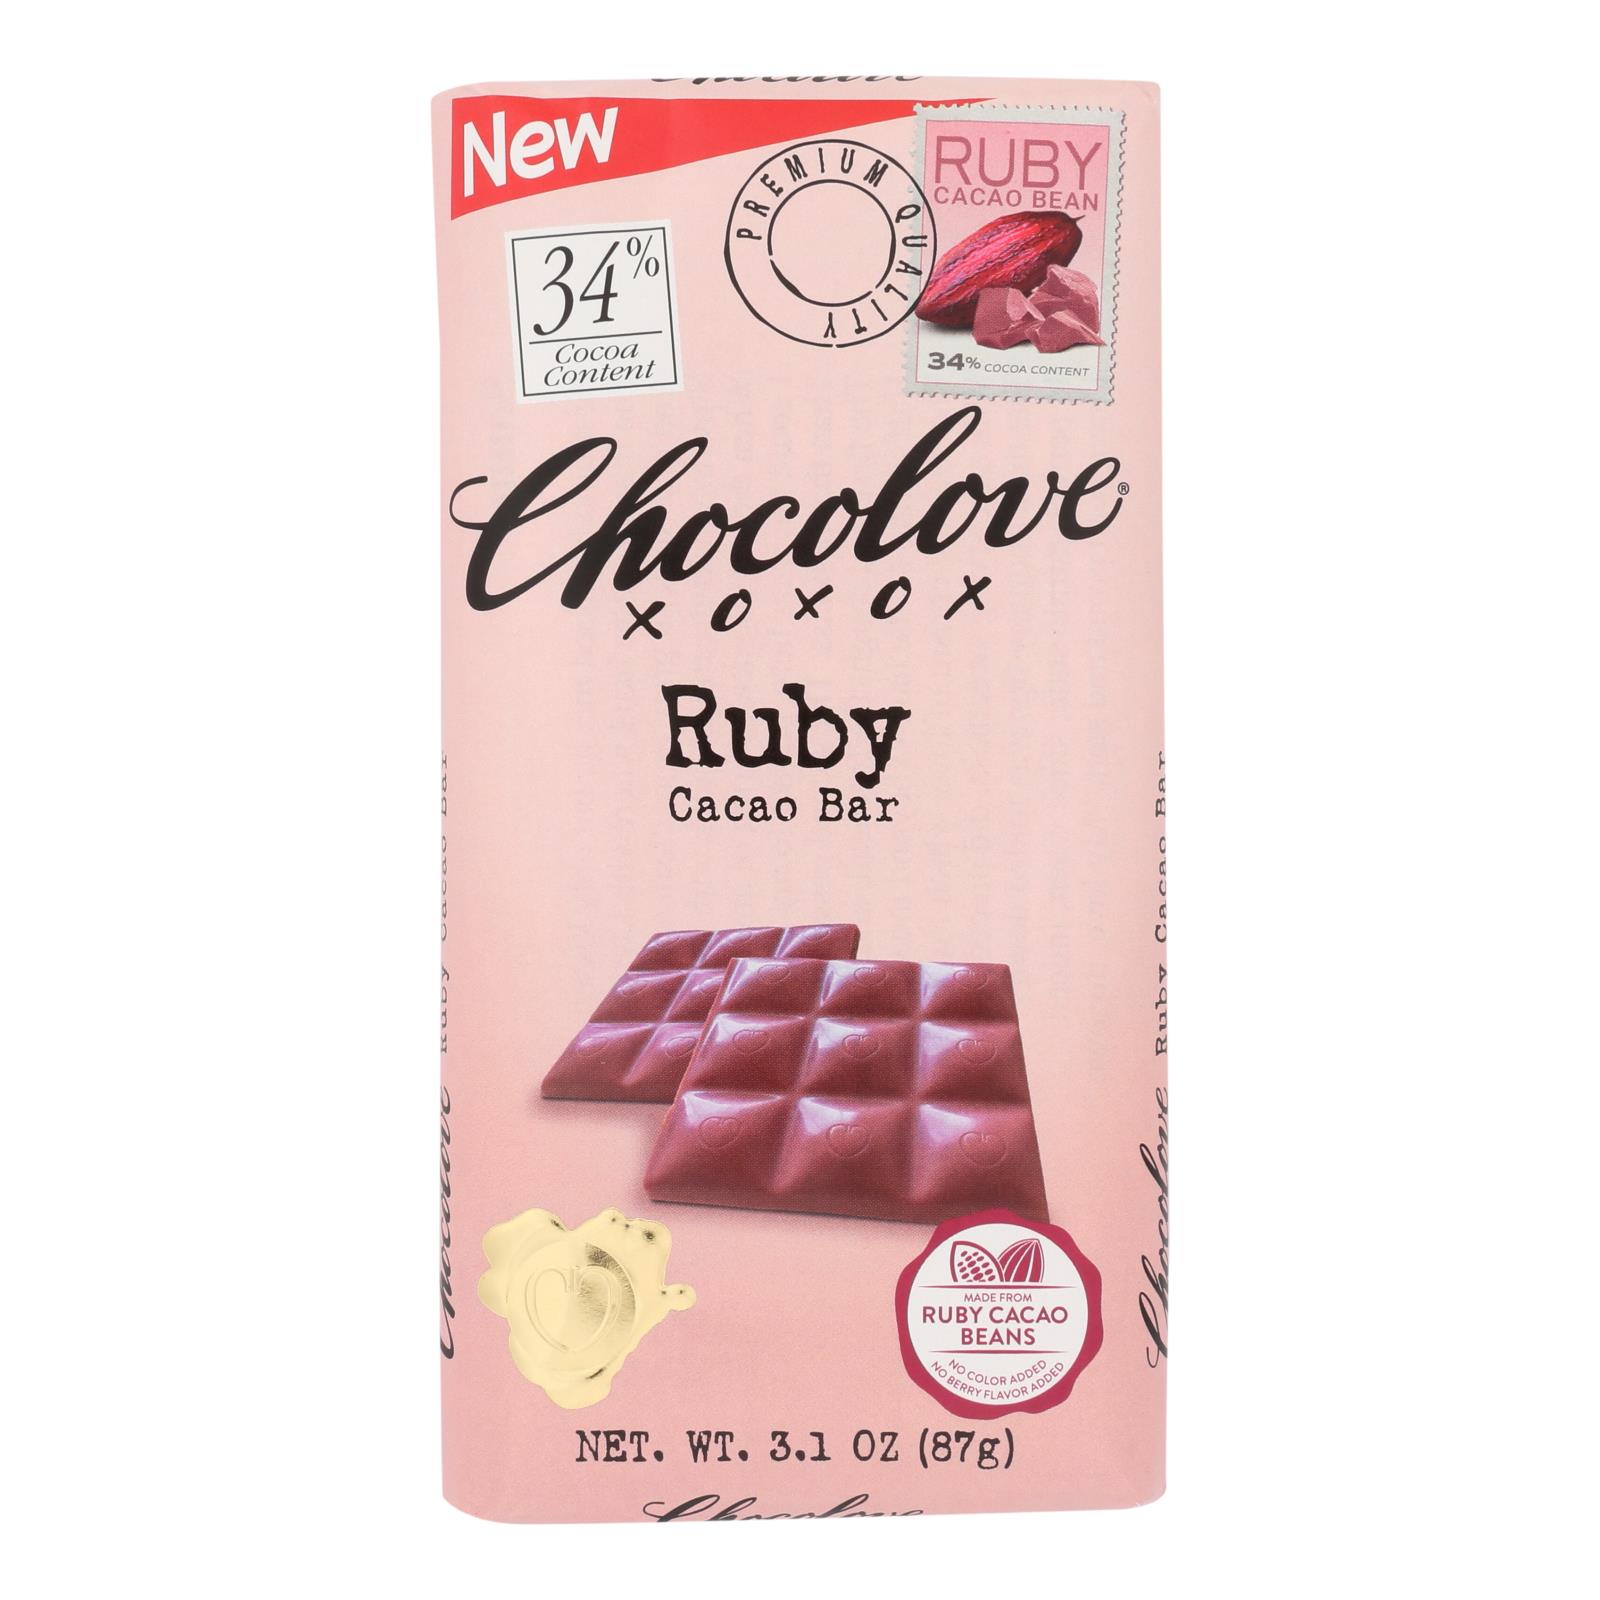 Chocolove Xoxox - Bar Ruby Cacao Bean - 12개 묶음상품 - 3.1 OZ